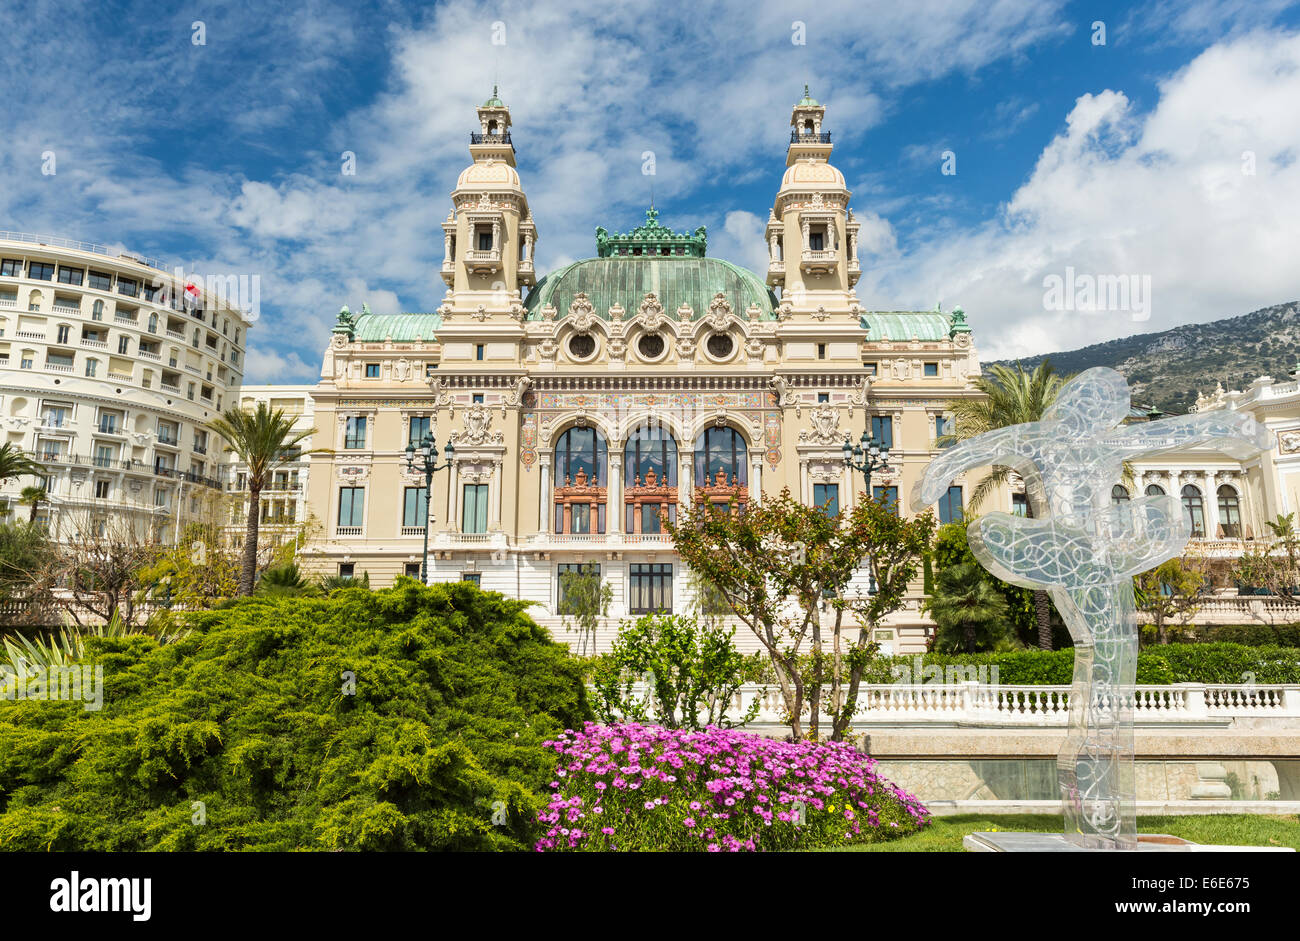 Salle Garnier the Opera house of Monte-Carlo Stock Photo